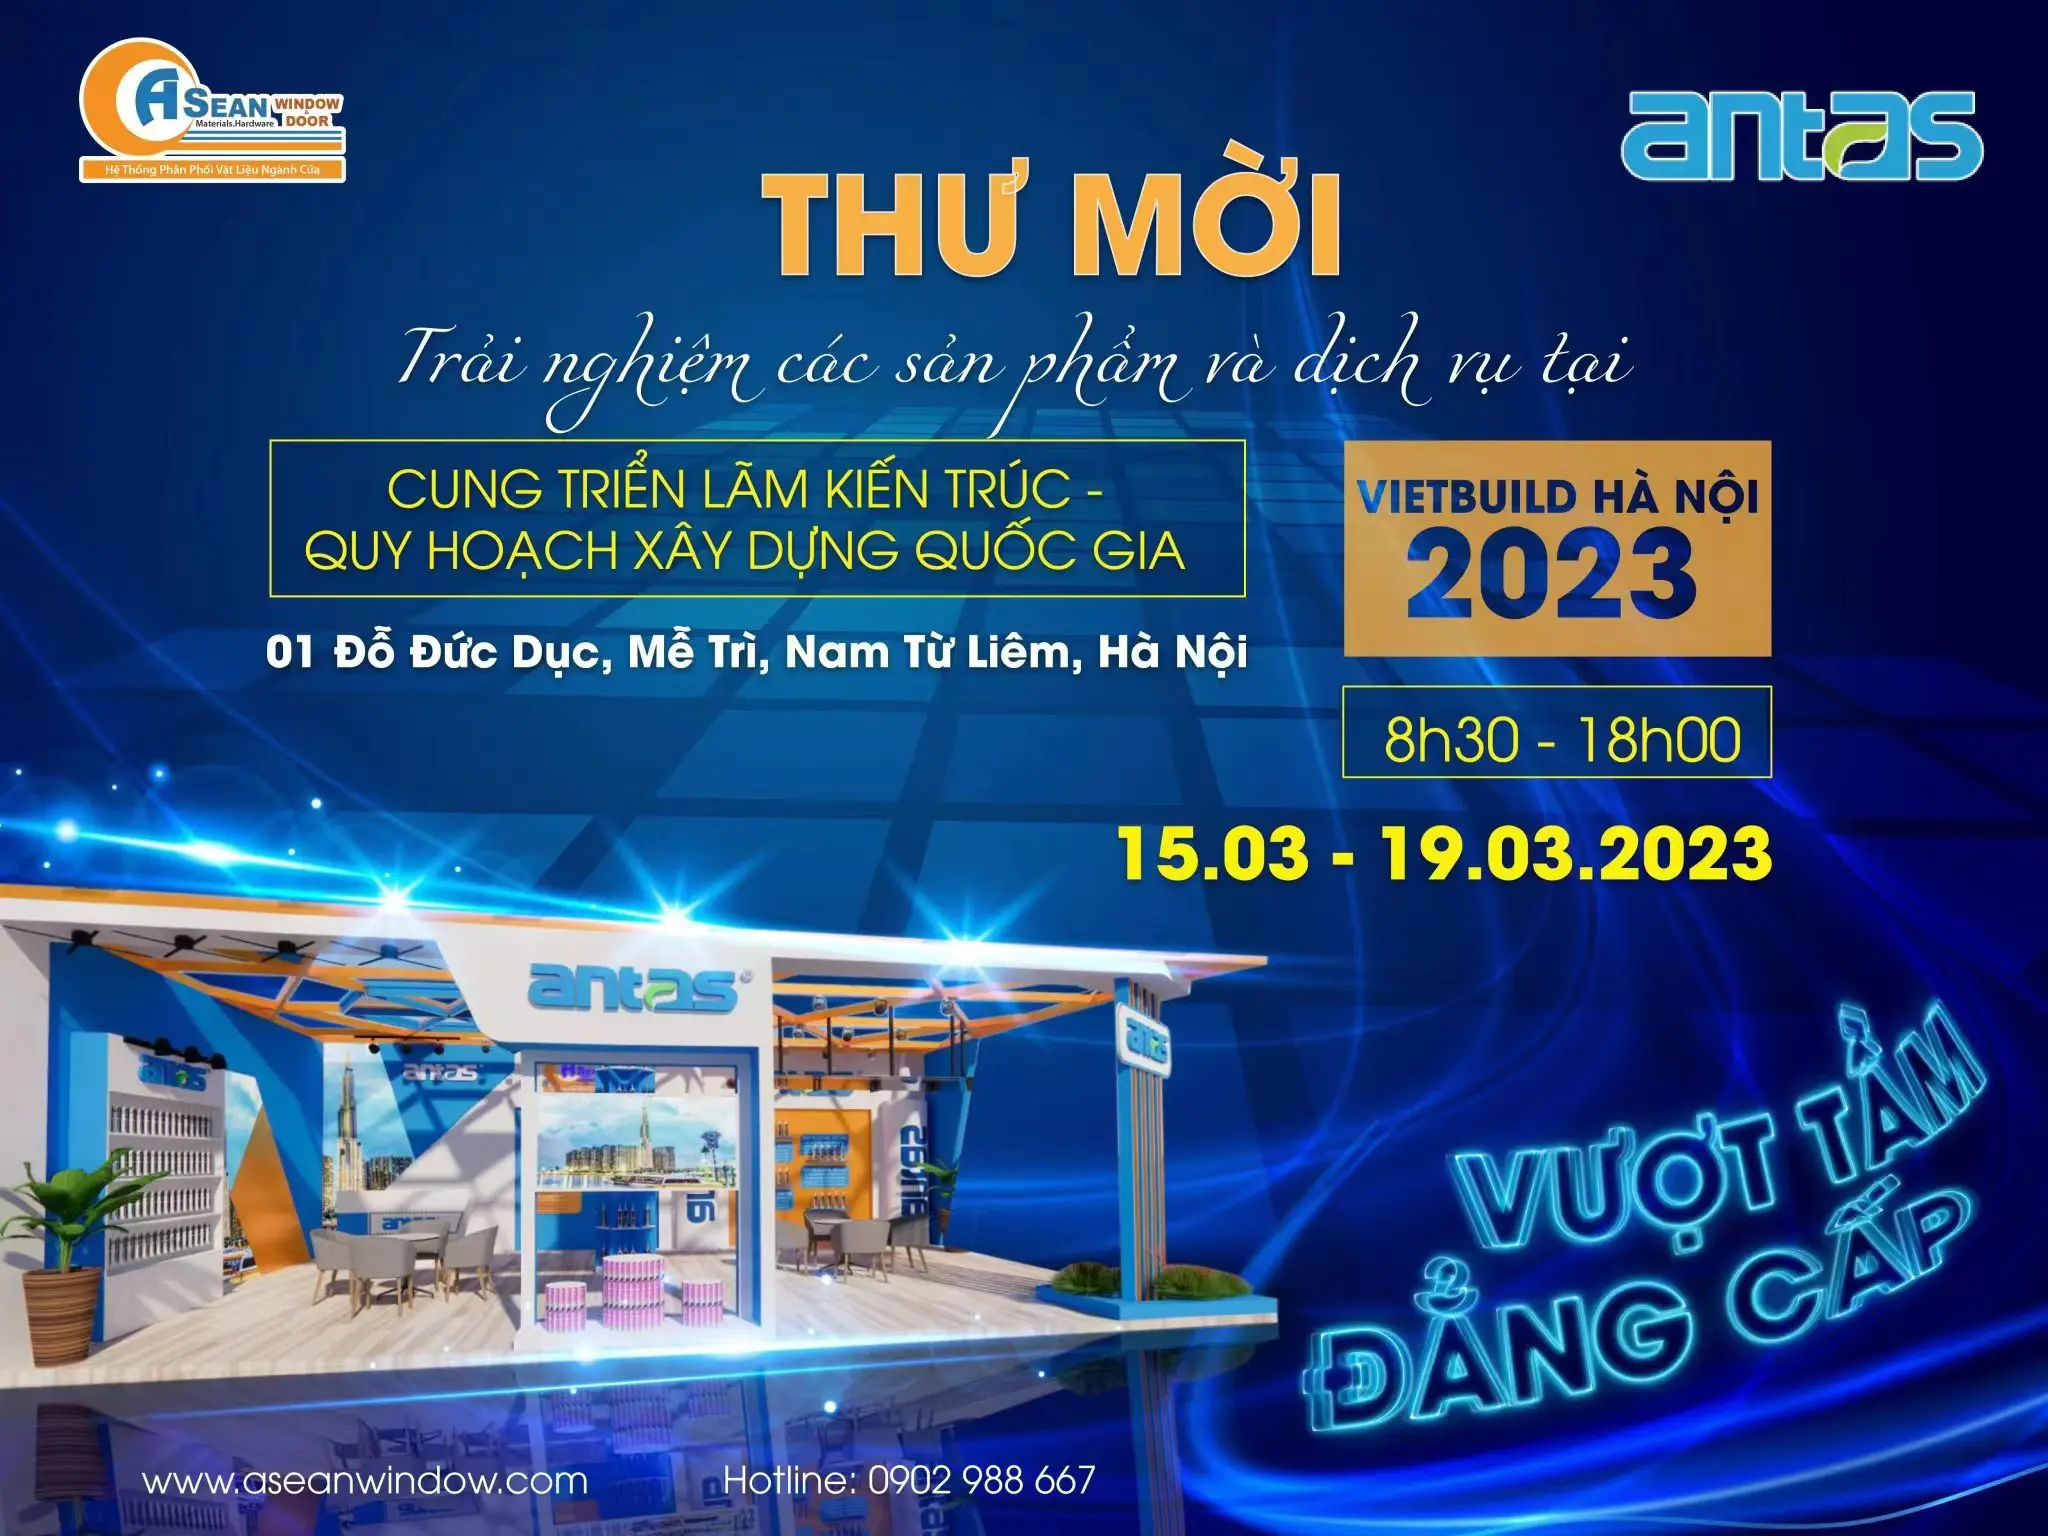 Vietbuild Hanoi 2023 est en cours | Mastic Antas